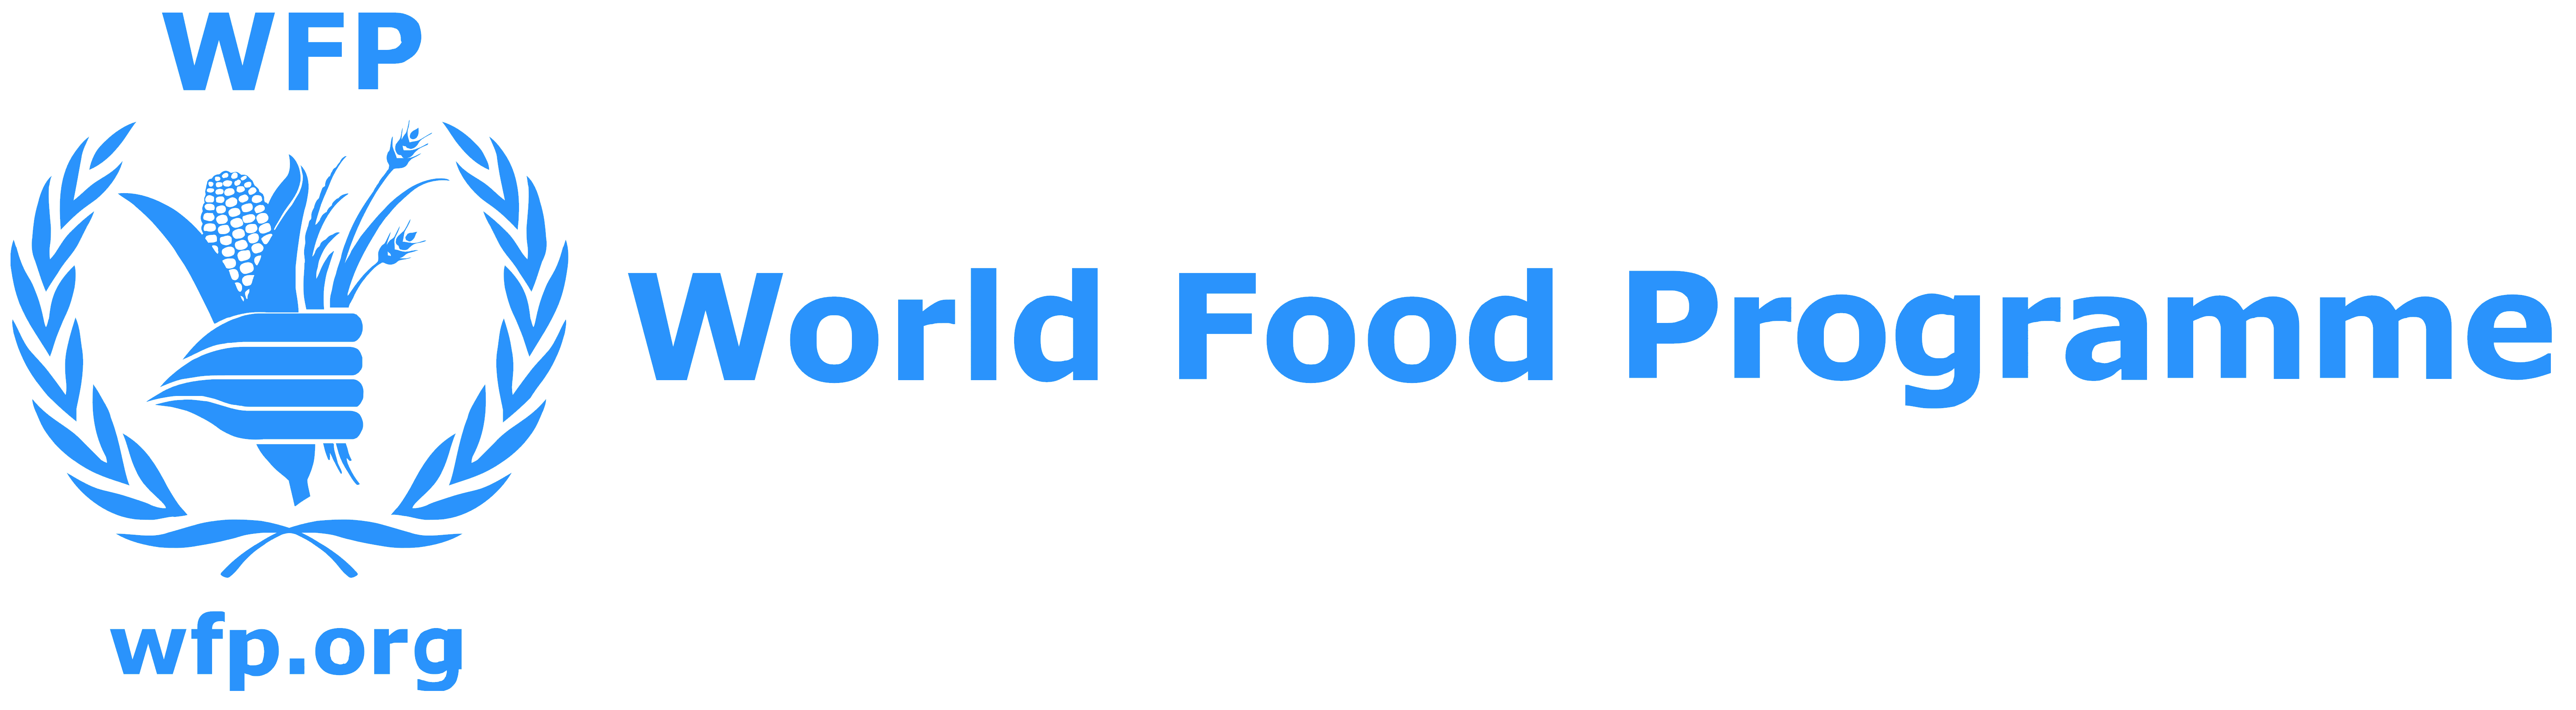 WFP_logo_World_Food_Programme